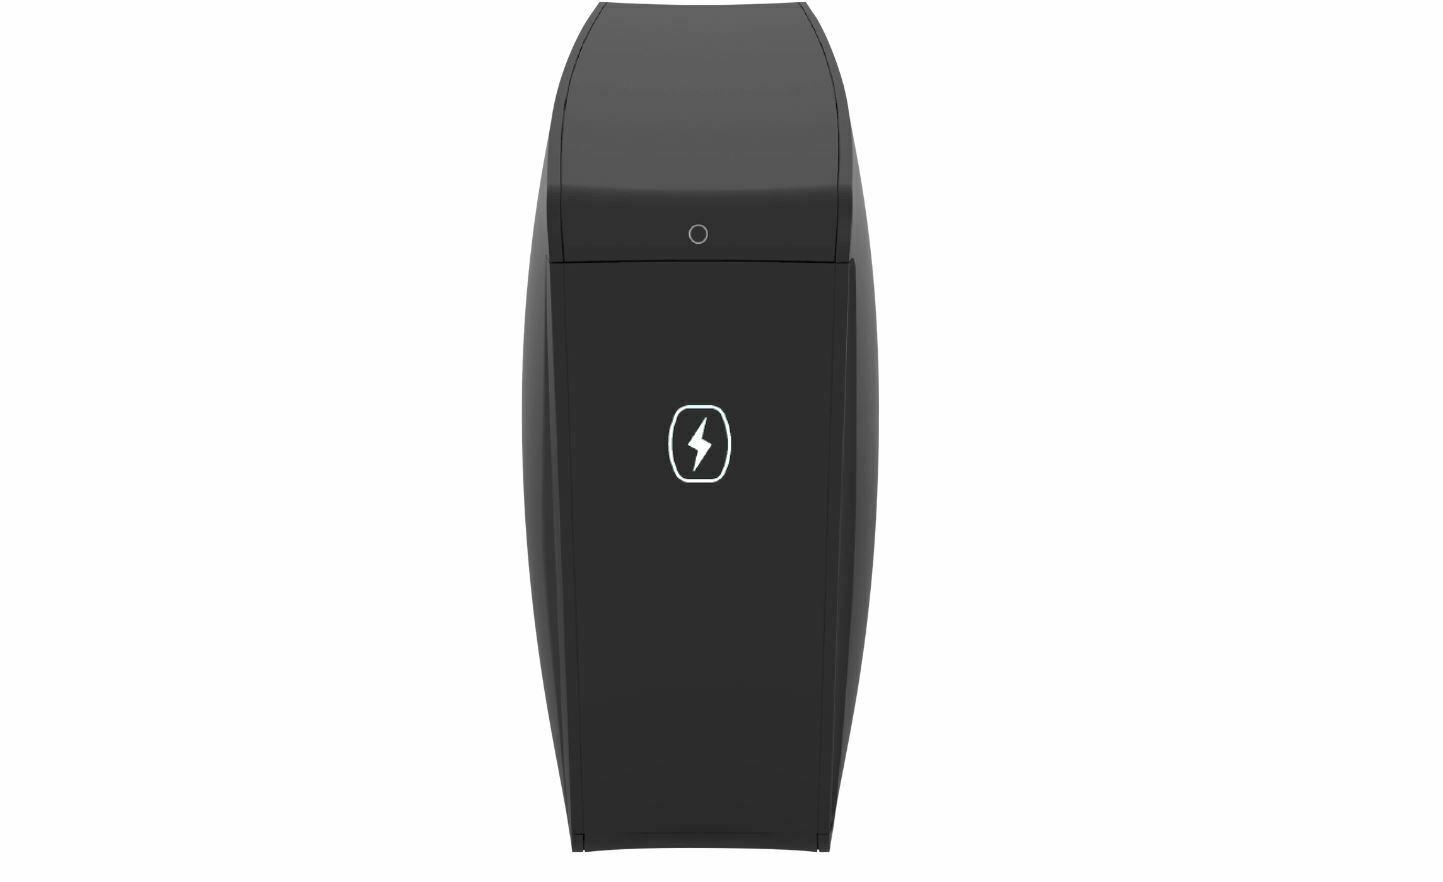 PhoneSoap Homesoap UV Sanitizer at Microsoft eBay Outlet Store (New)- $39.99 +FS